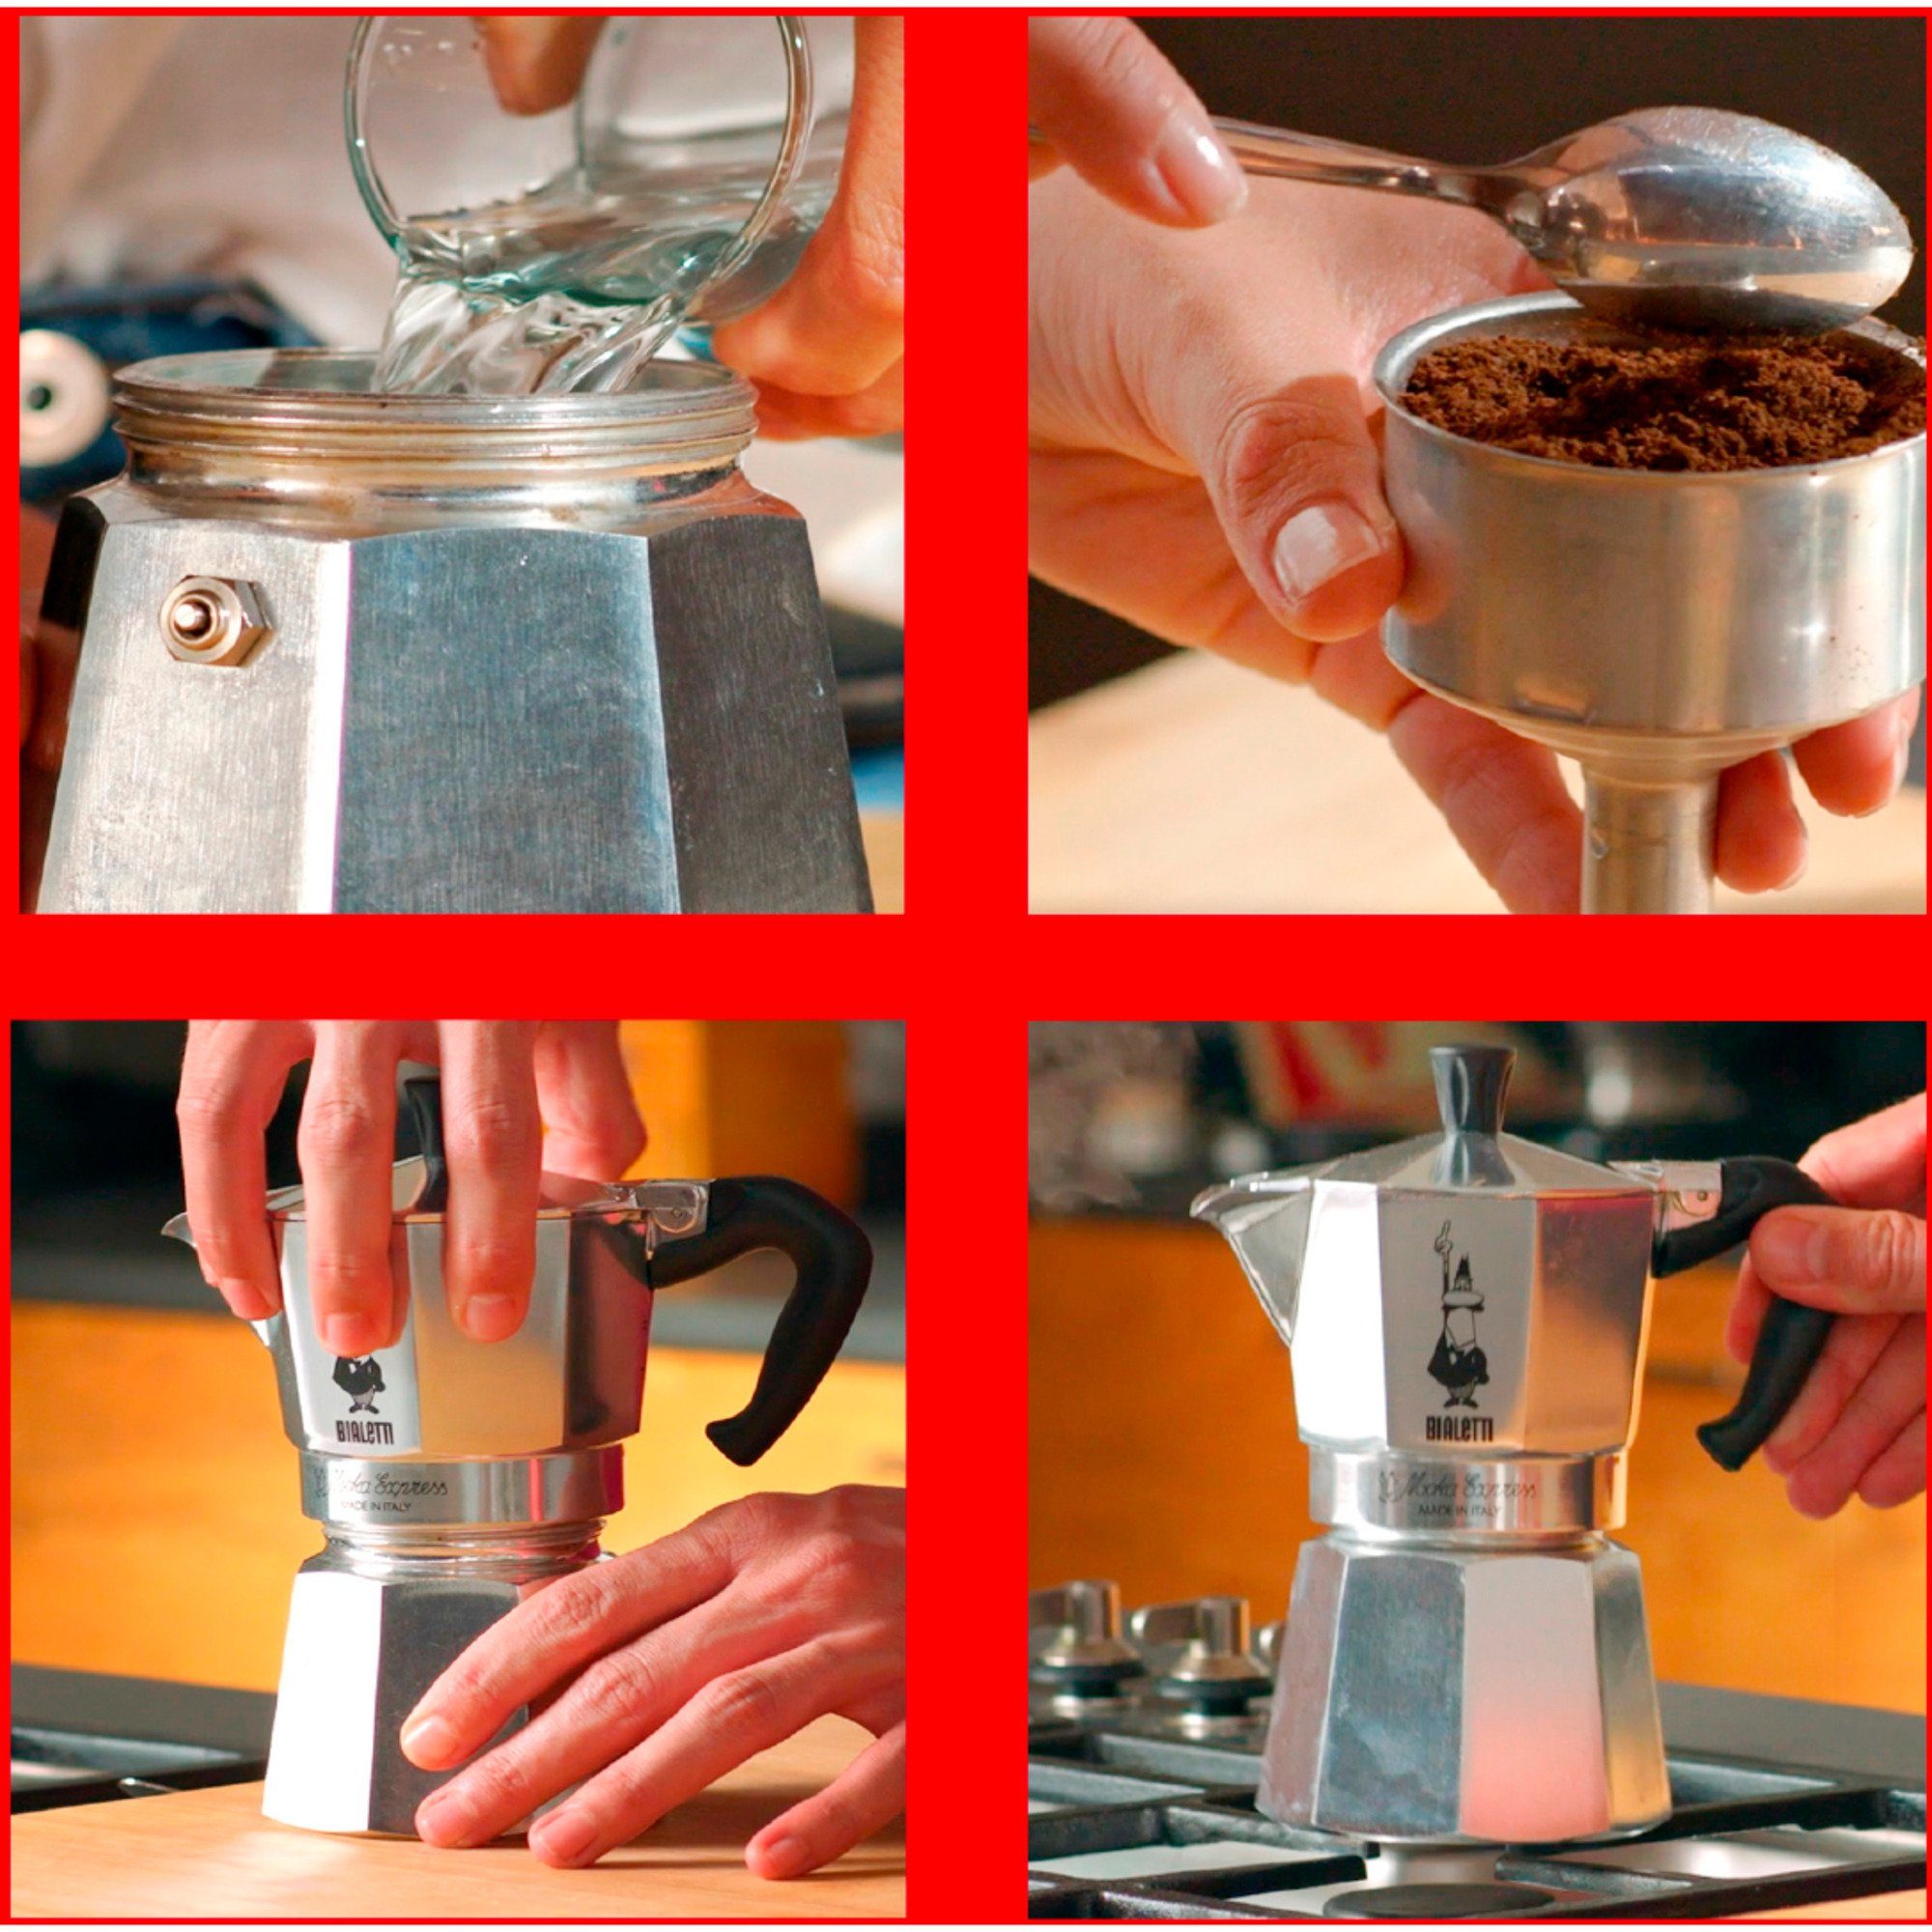 BIALETTI Tasse) Express, Espressomaschine, Bialetti Moka (1 Kaffeebereiter